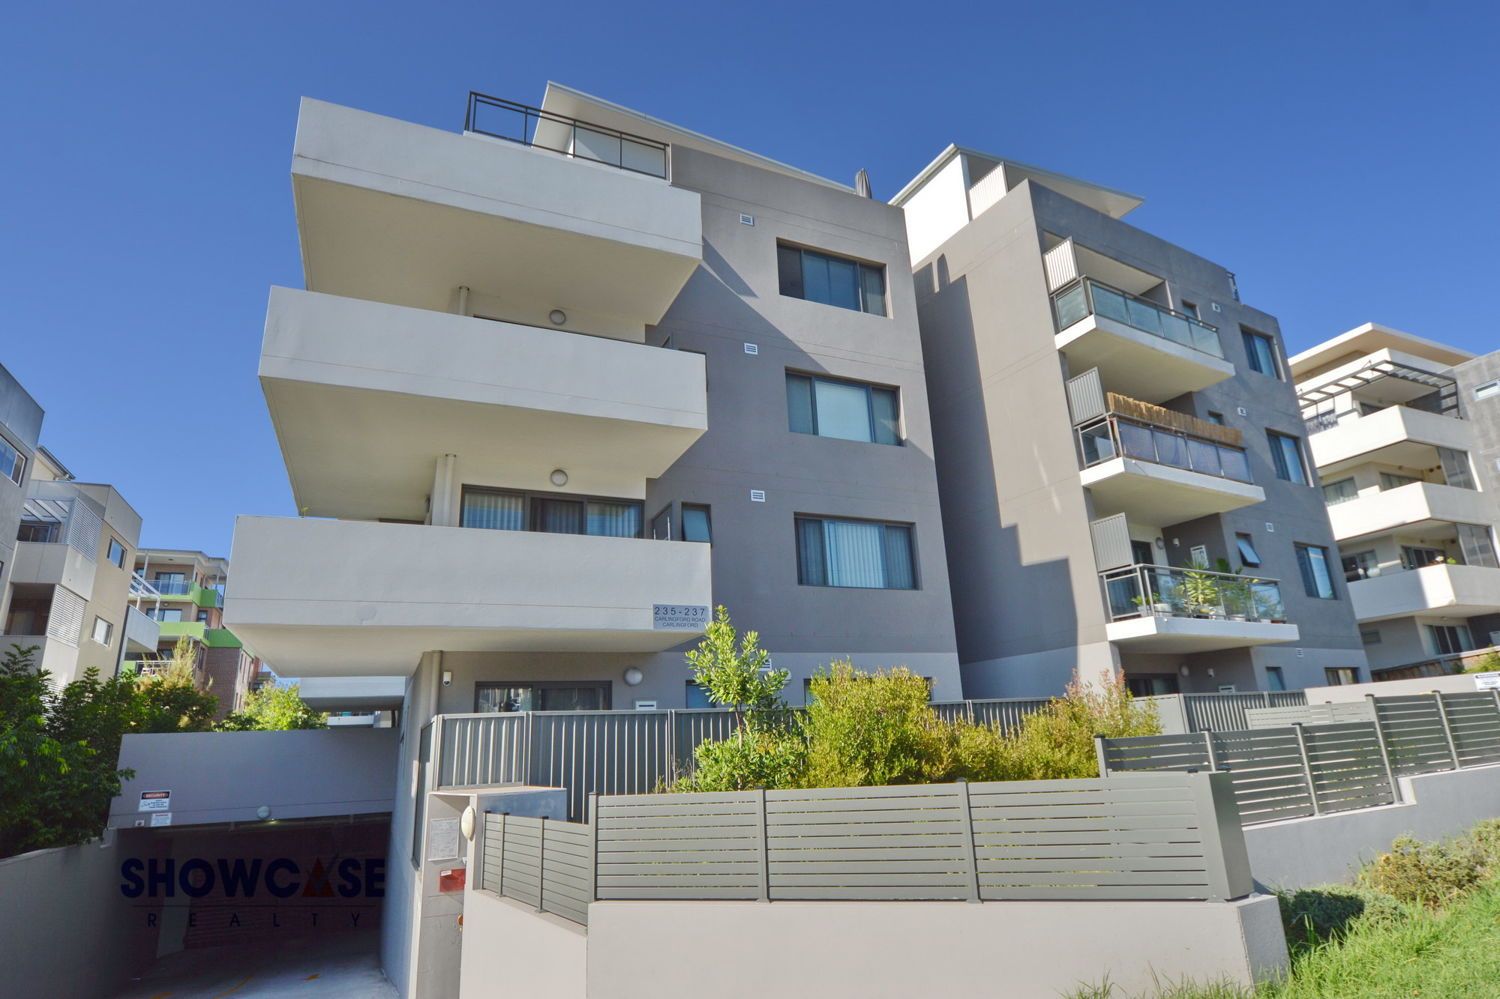 2 bedrooms Apartment / Unit / Flat in 104/235-237 Carlingford Road CARLINGFORD NSW, 2118